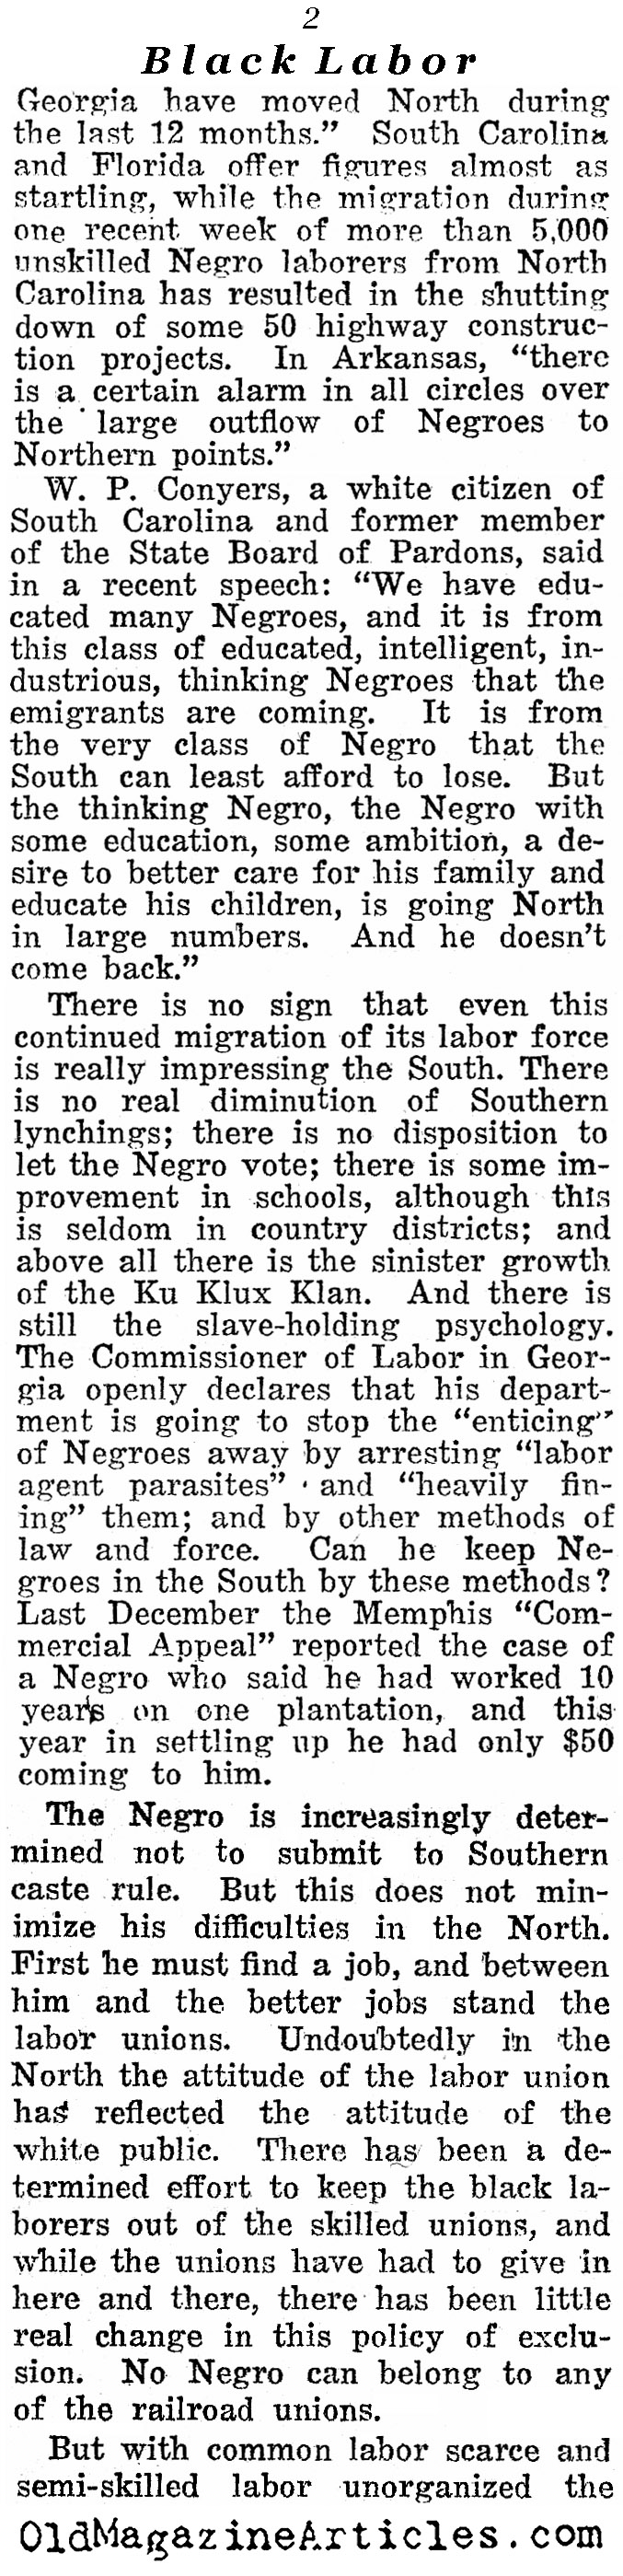 W.E.B. DuBois on Black Labor (Reader's Digest, 1923)